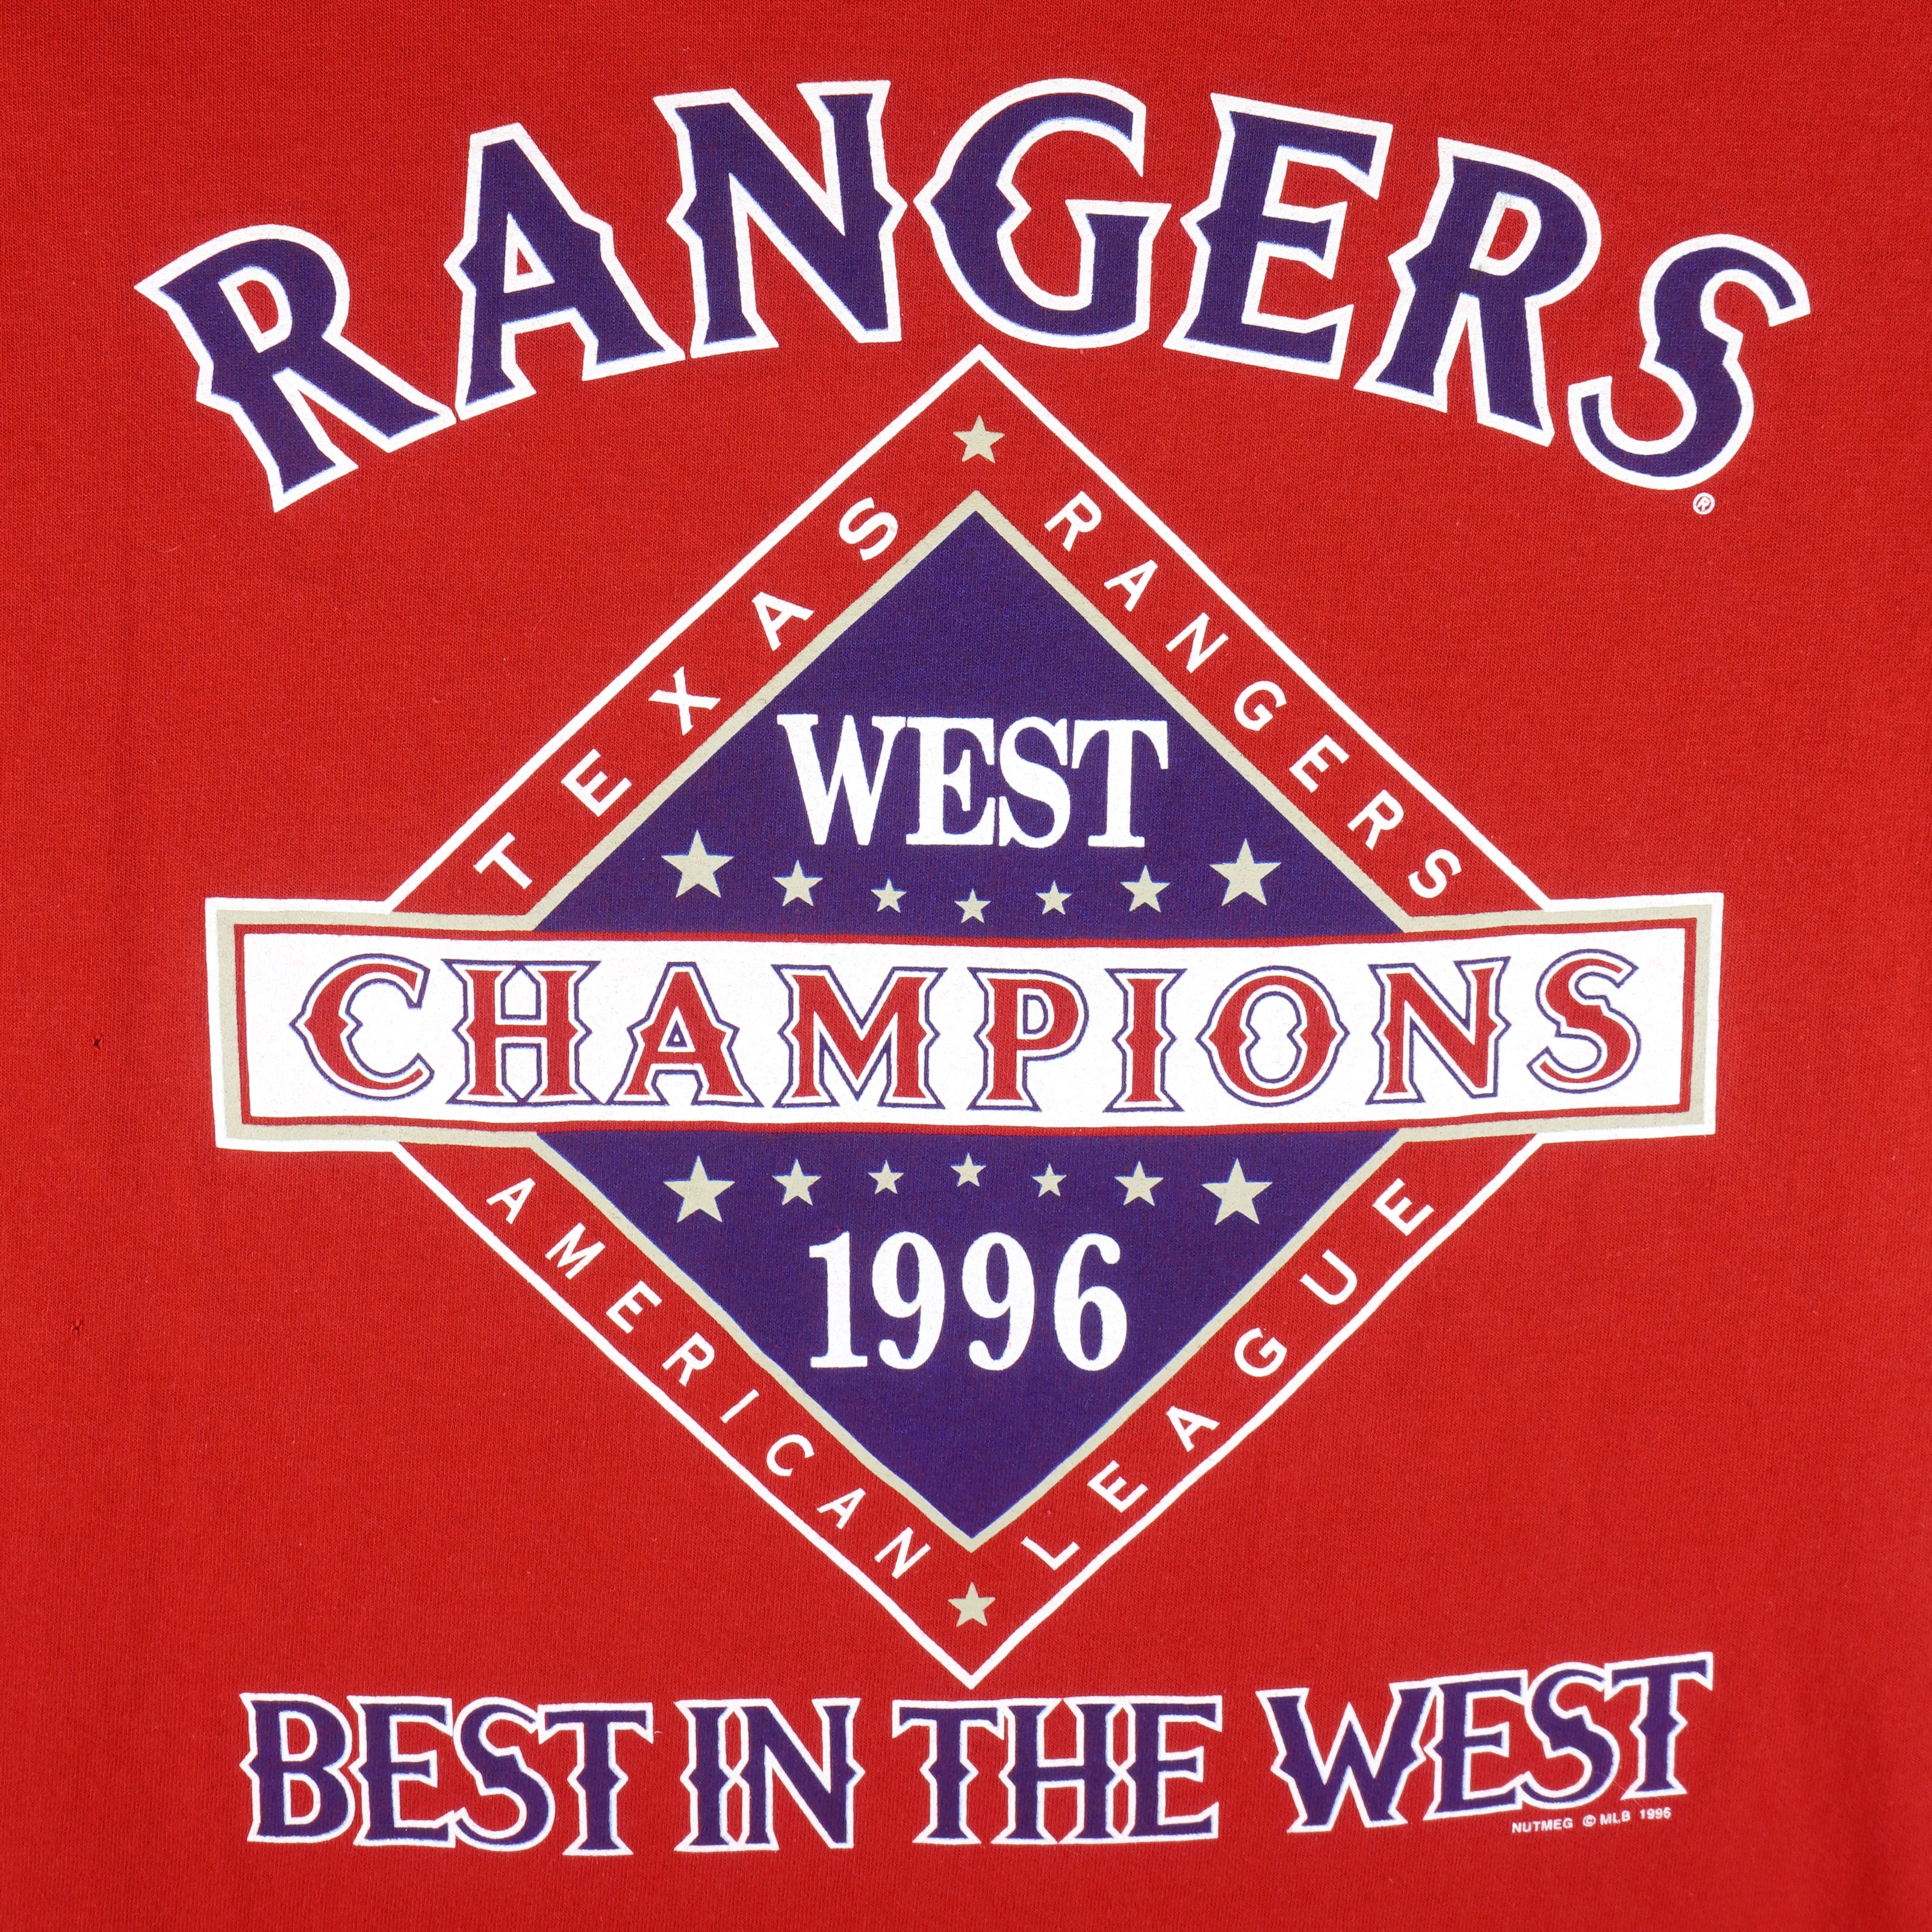 Official Vintage 90s Mlb Texas Rangers Baseball Shirt